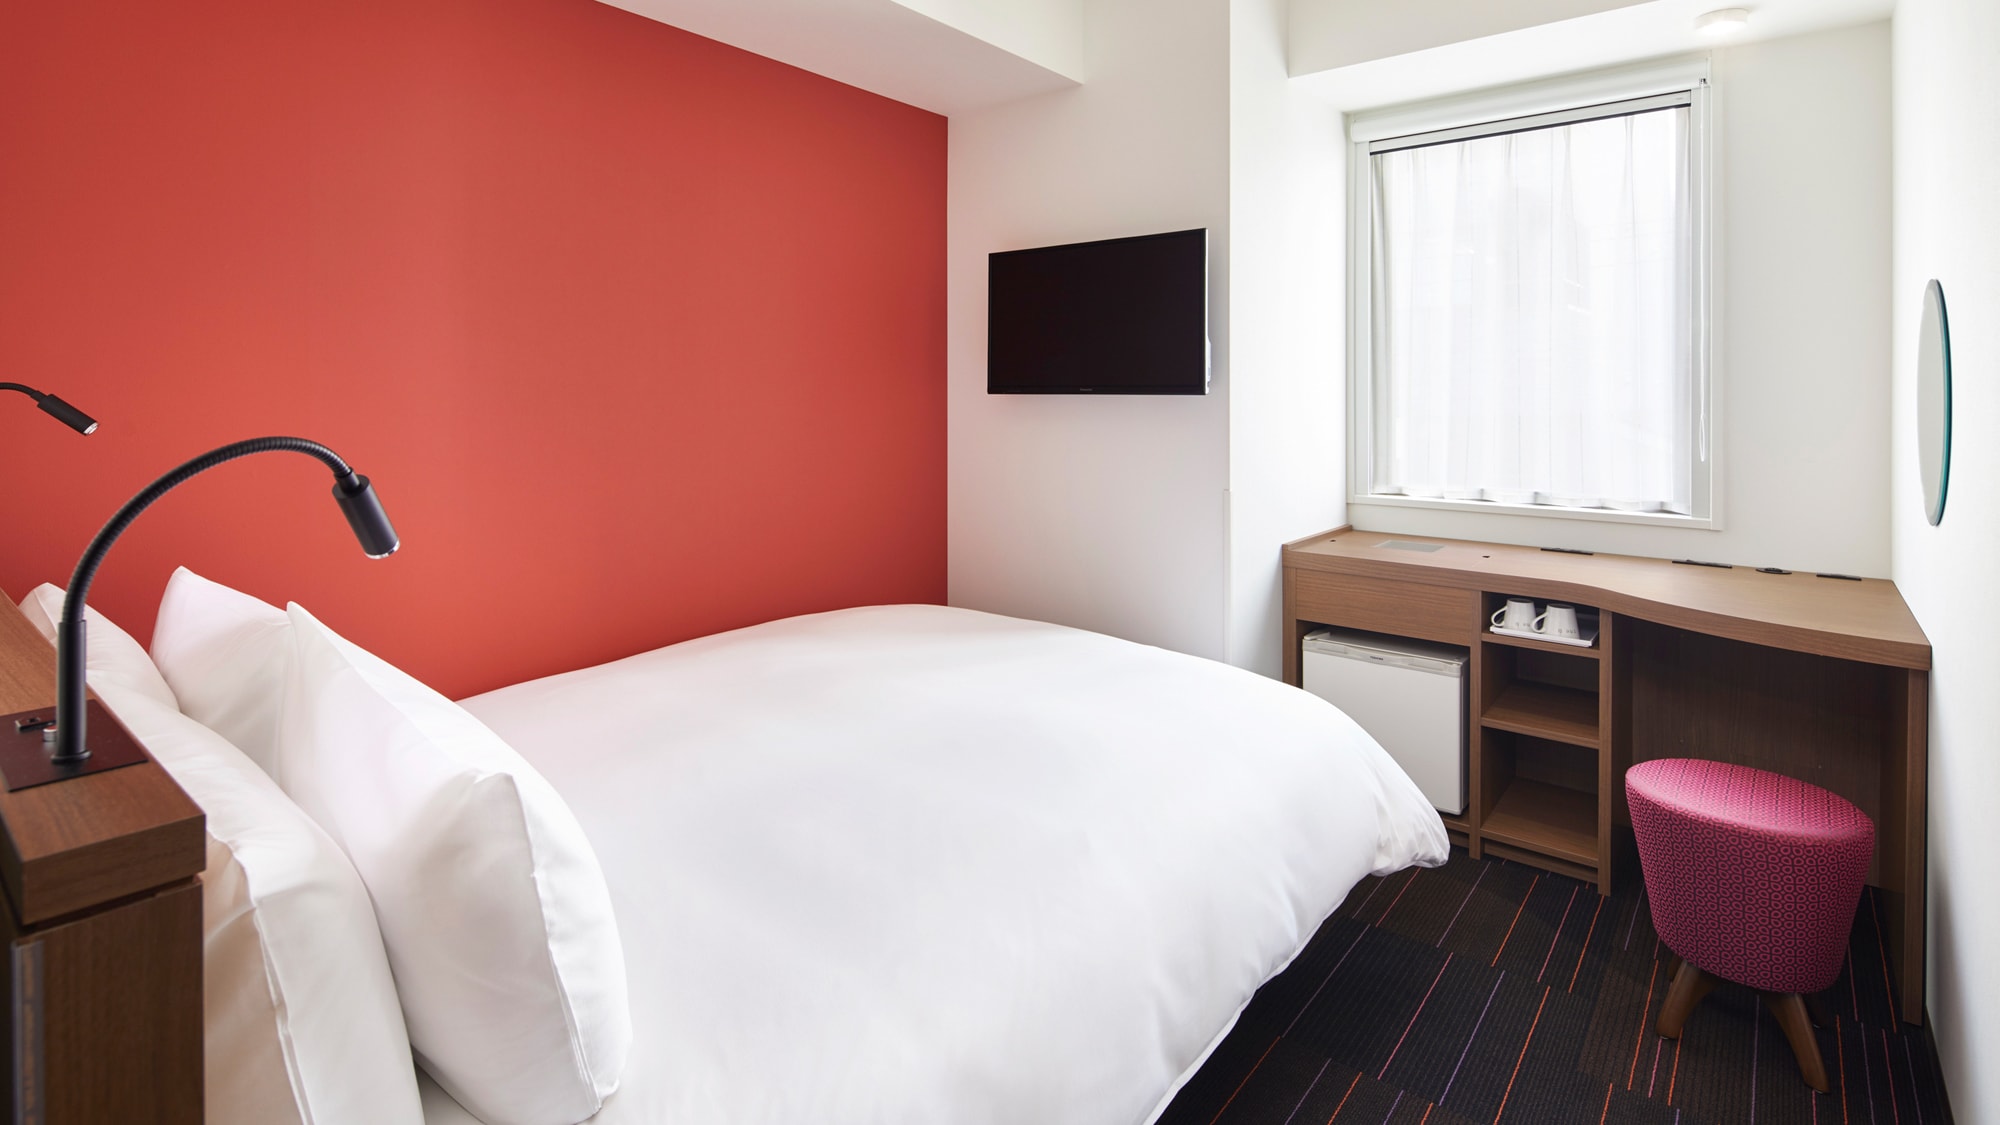 <Room> ◆ Standard Double ◆ 14 sqm [Bed width 140 cm]